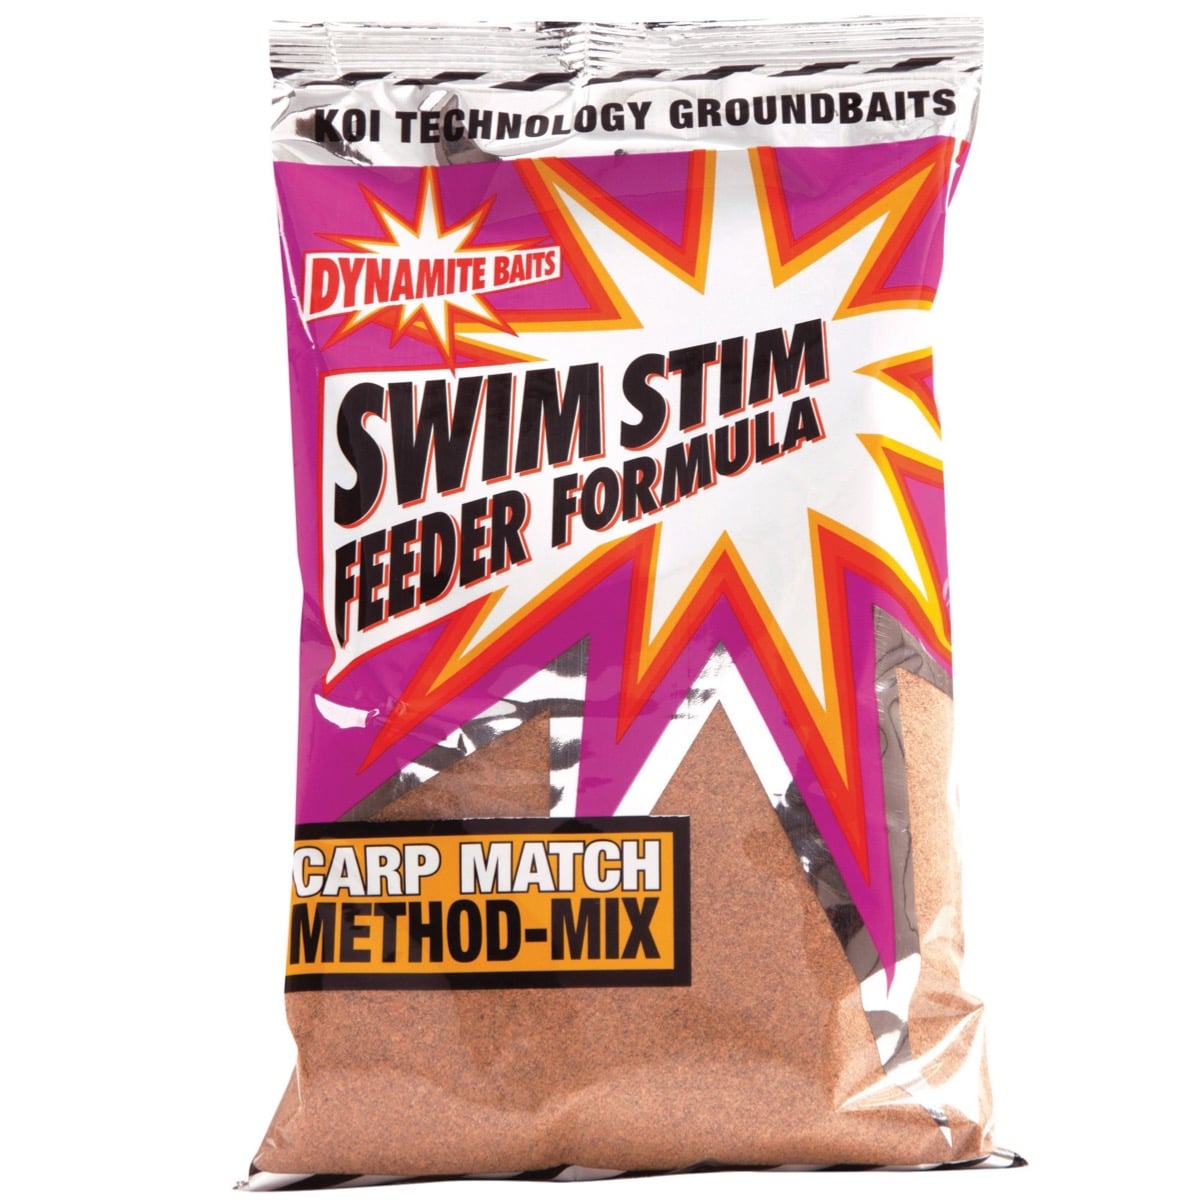 Dynamite Baits Swim Stim Feeder Formula Carp Match Method Mix 900g